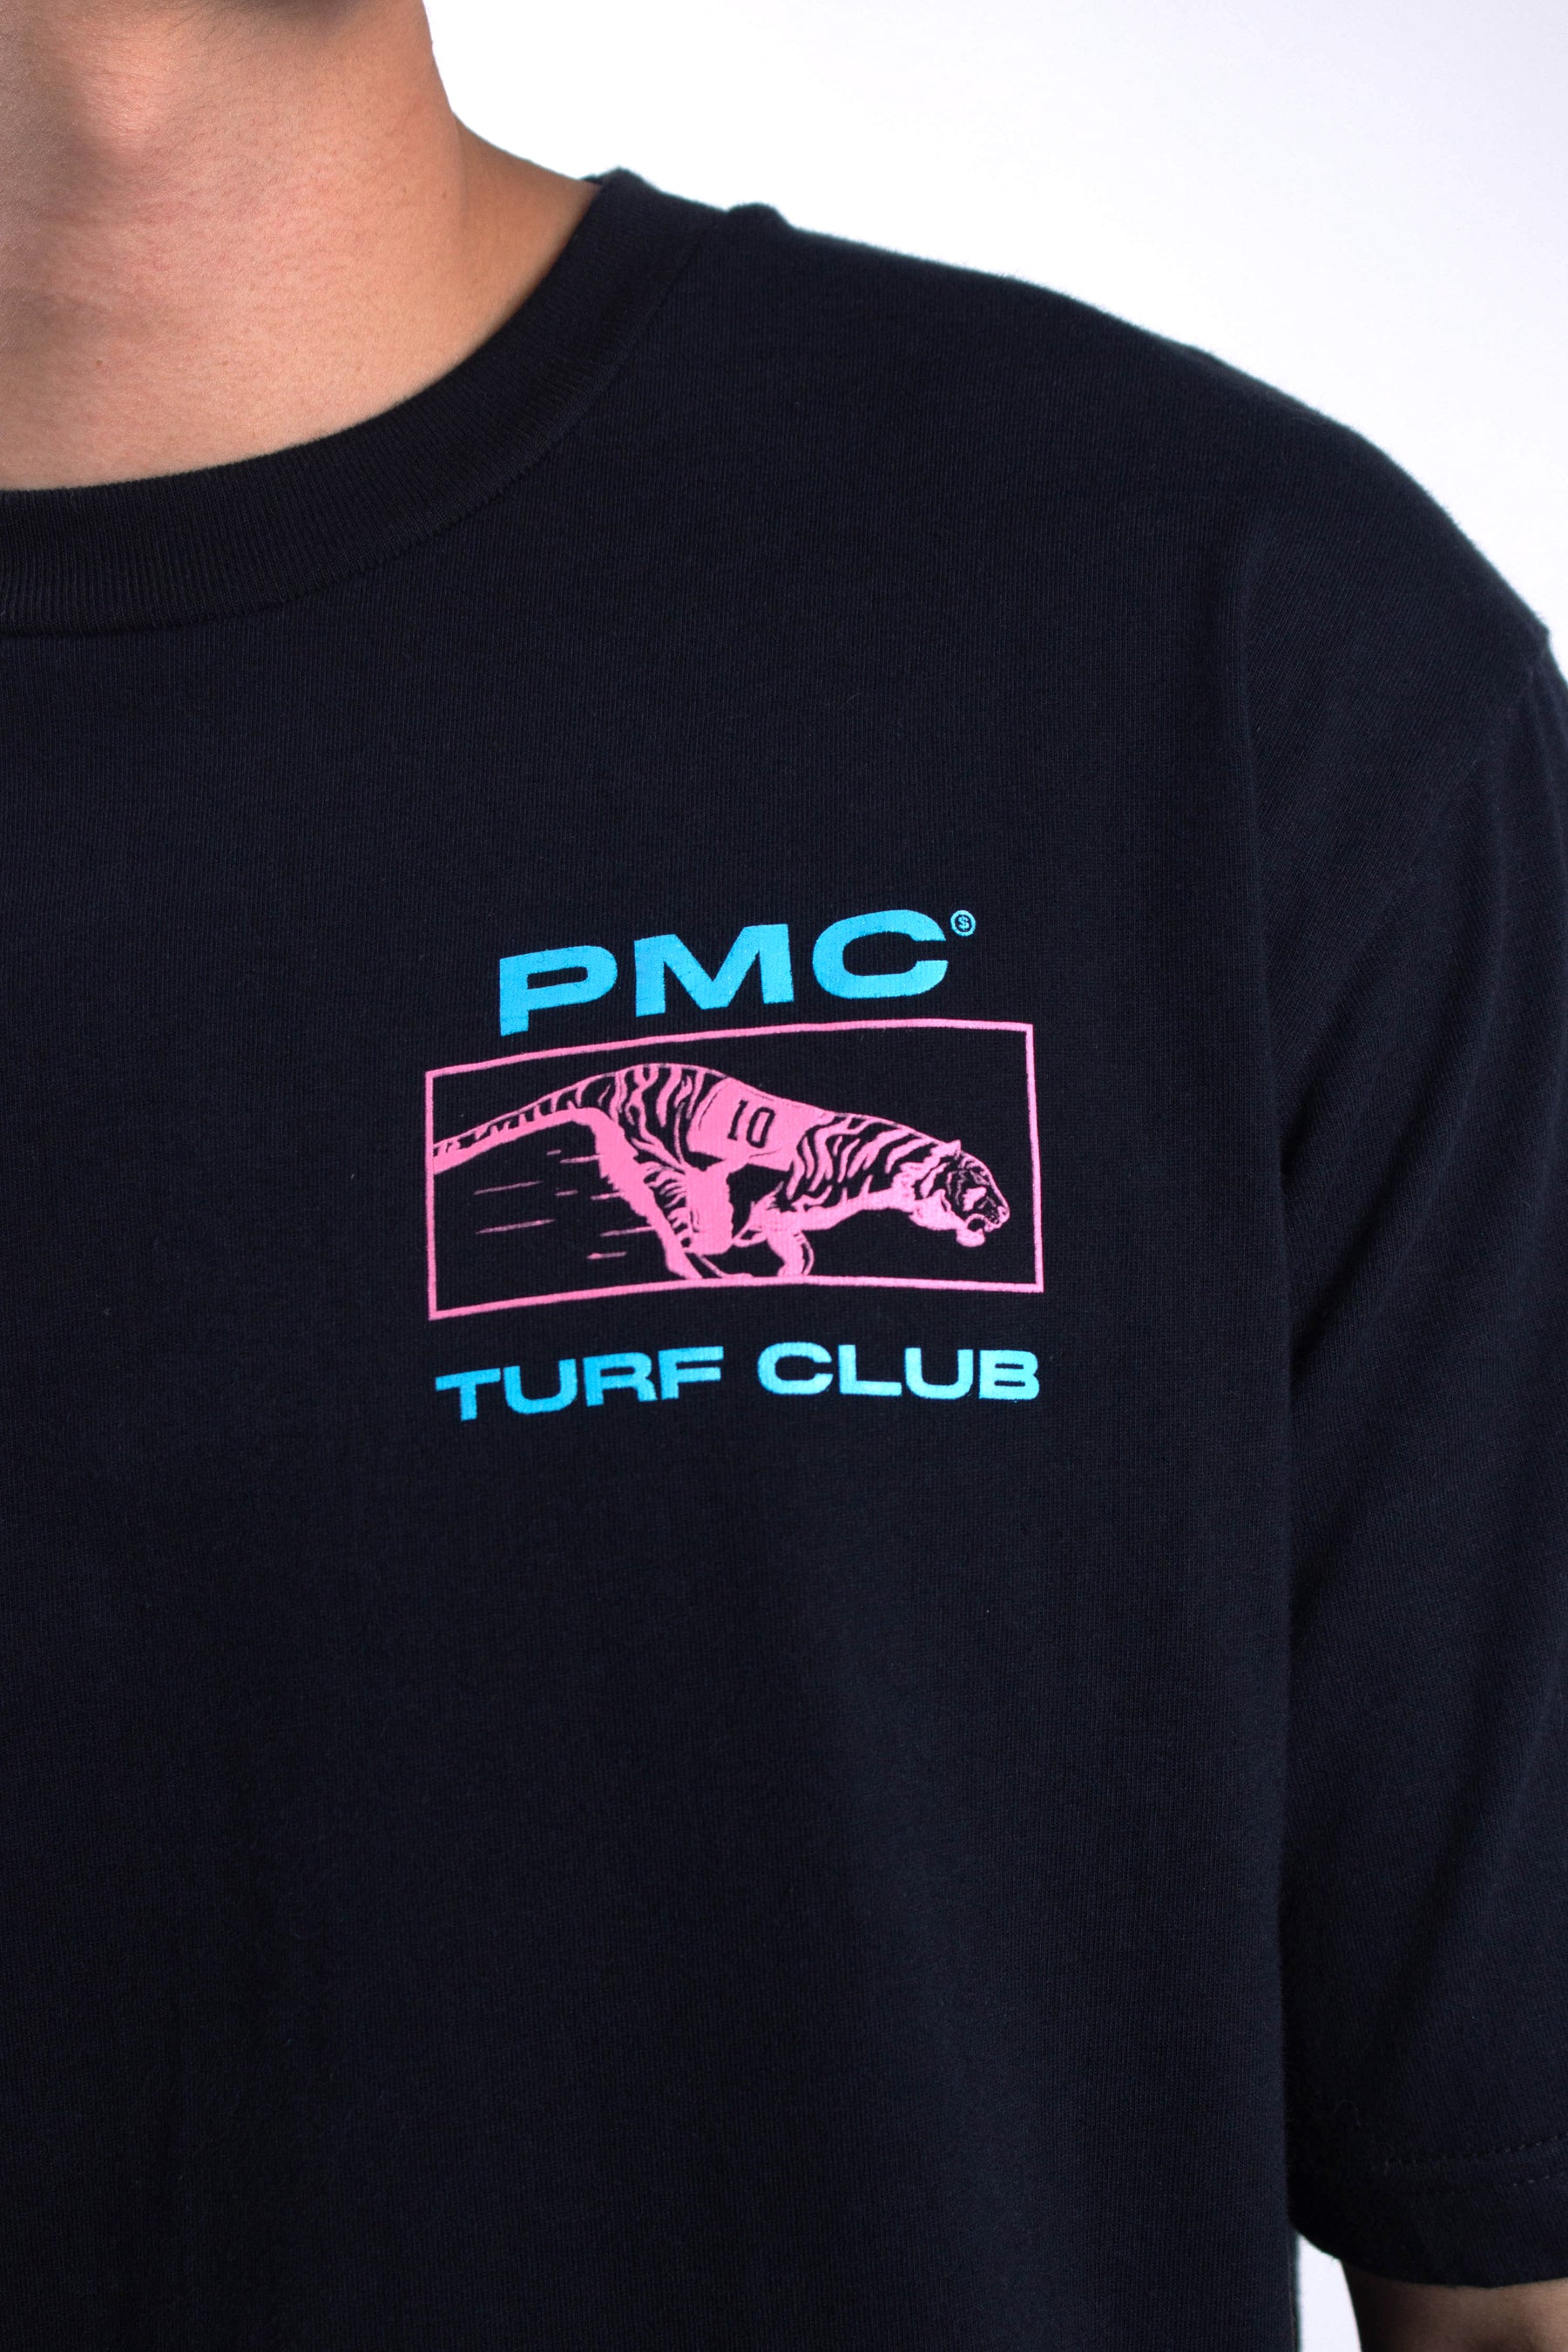 PMC Turf Club Tee Black